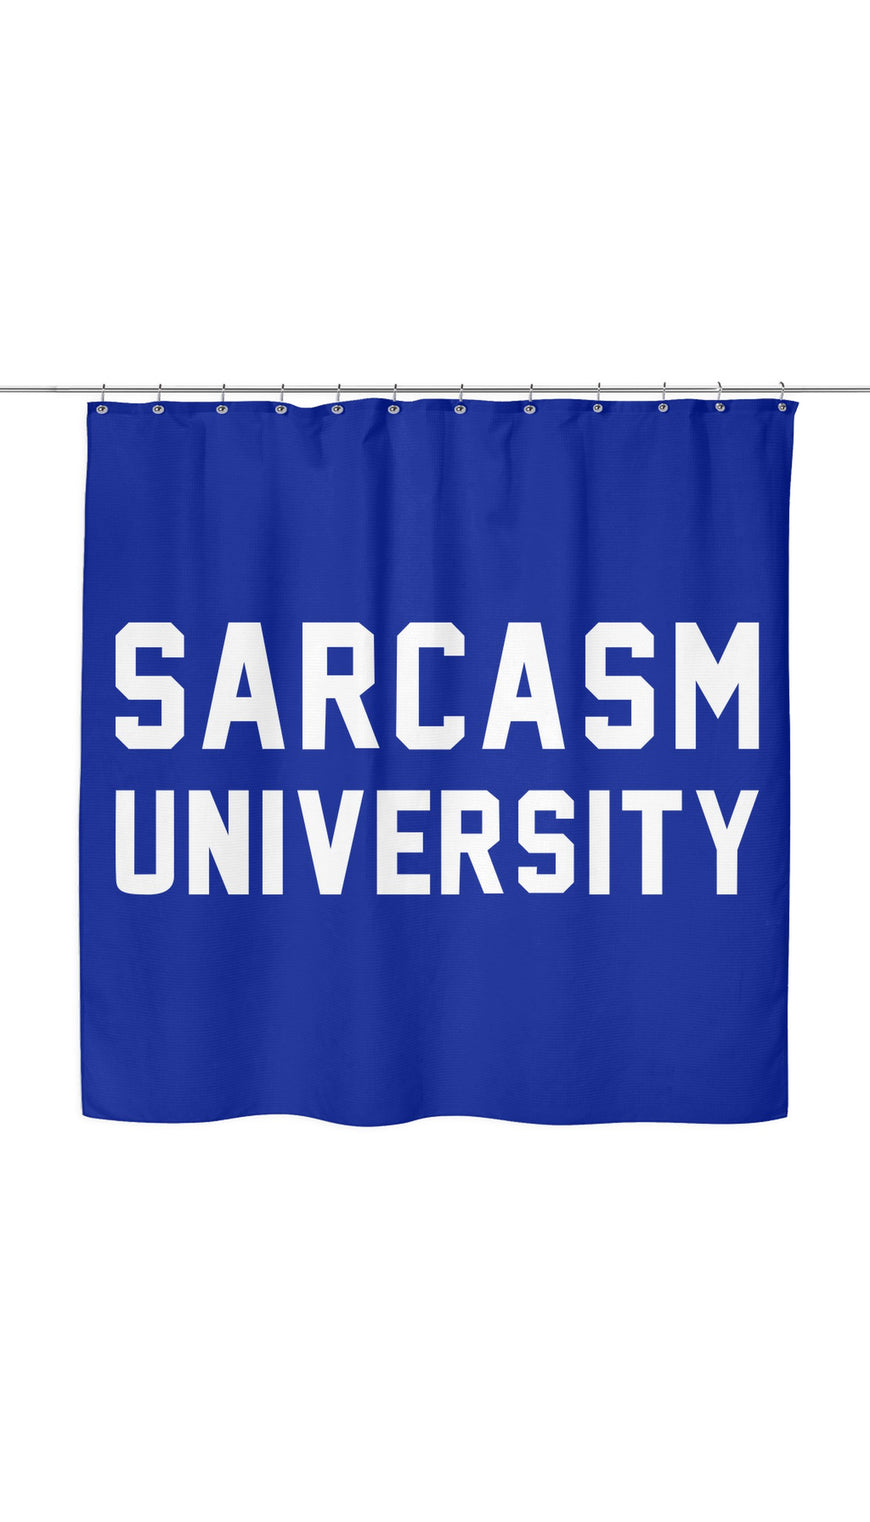 Sarcasm University Shower Curtain